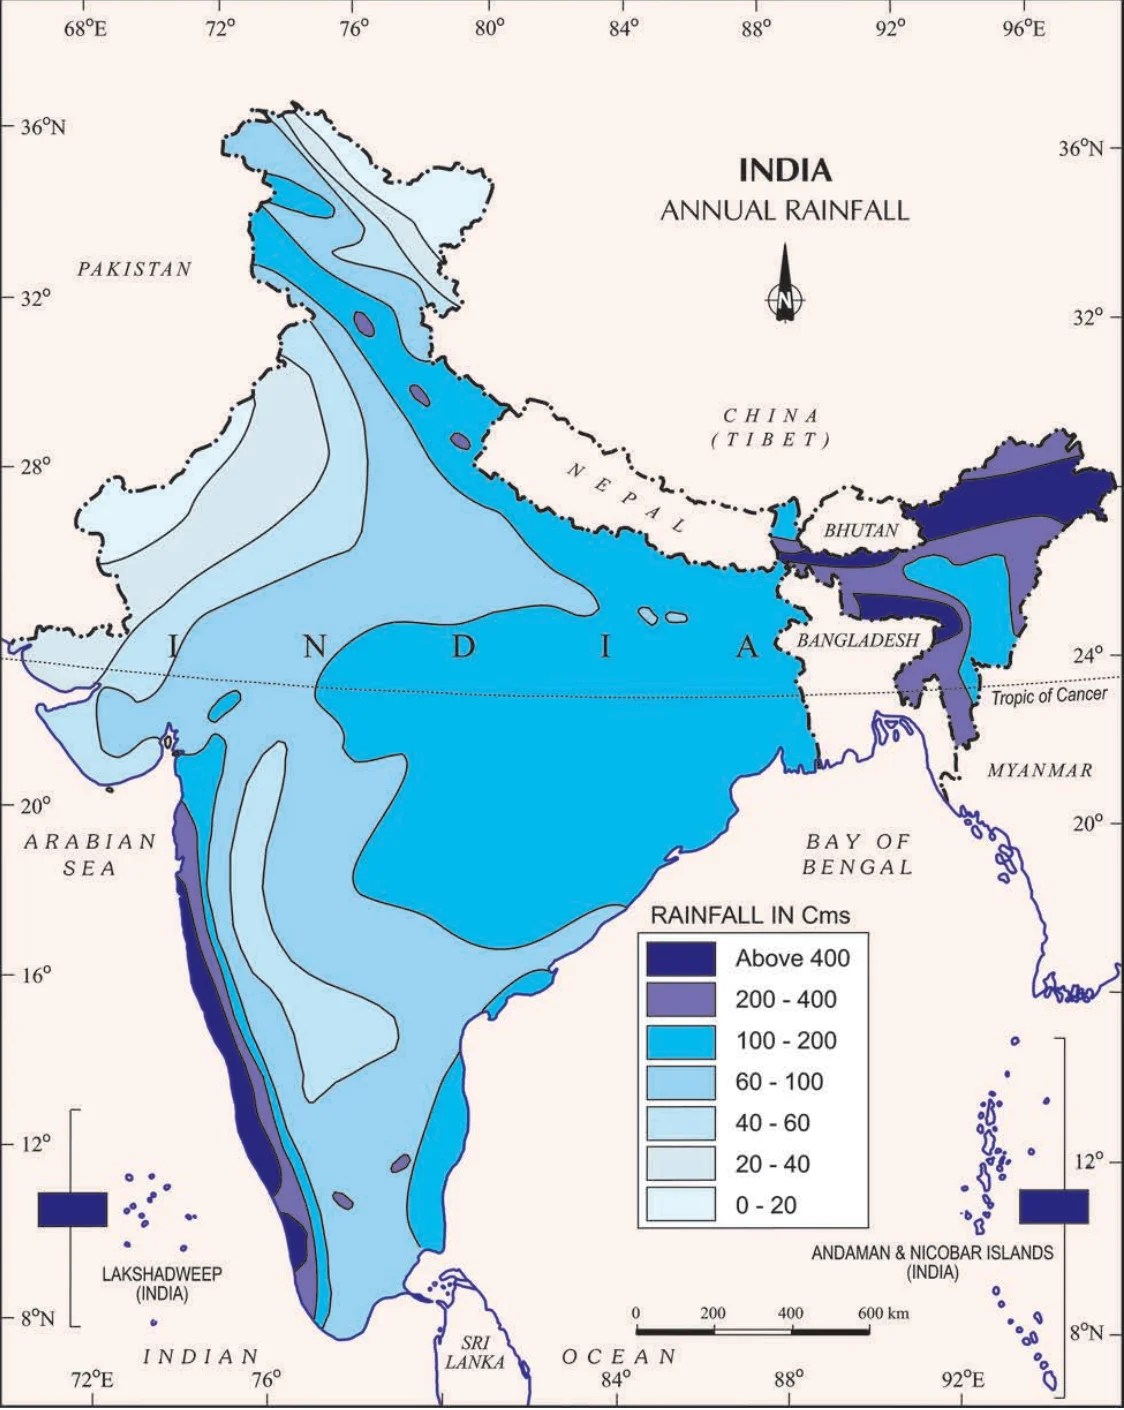 India: Annual Rainfall